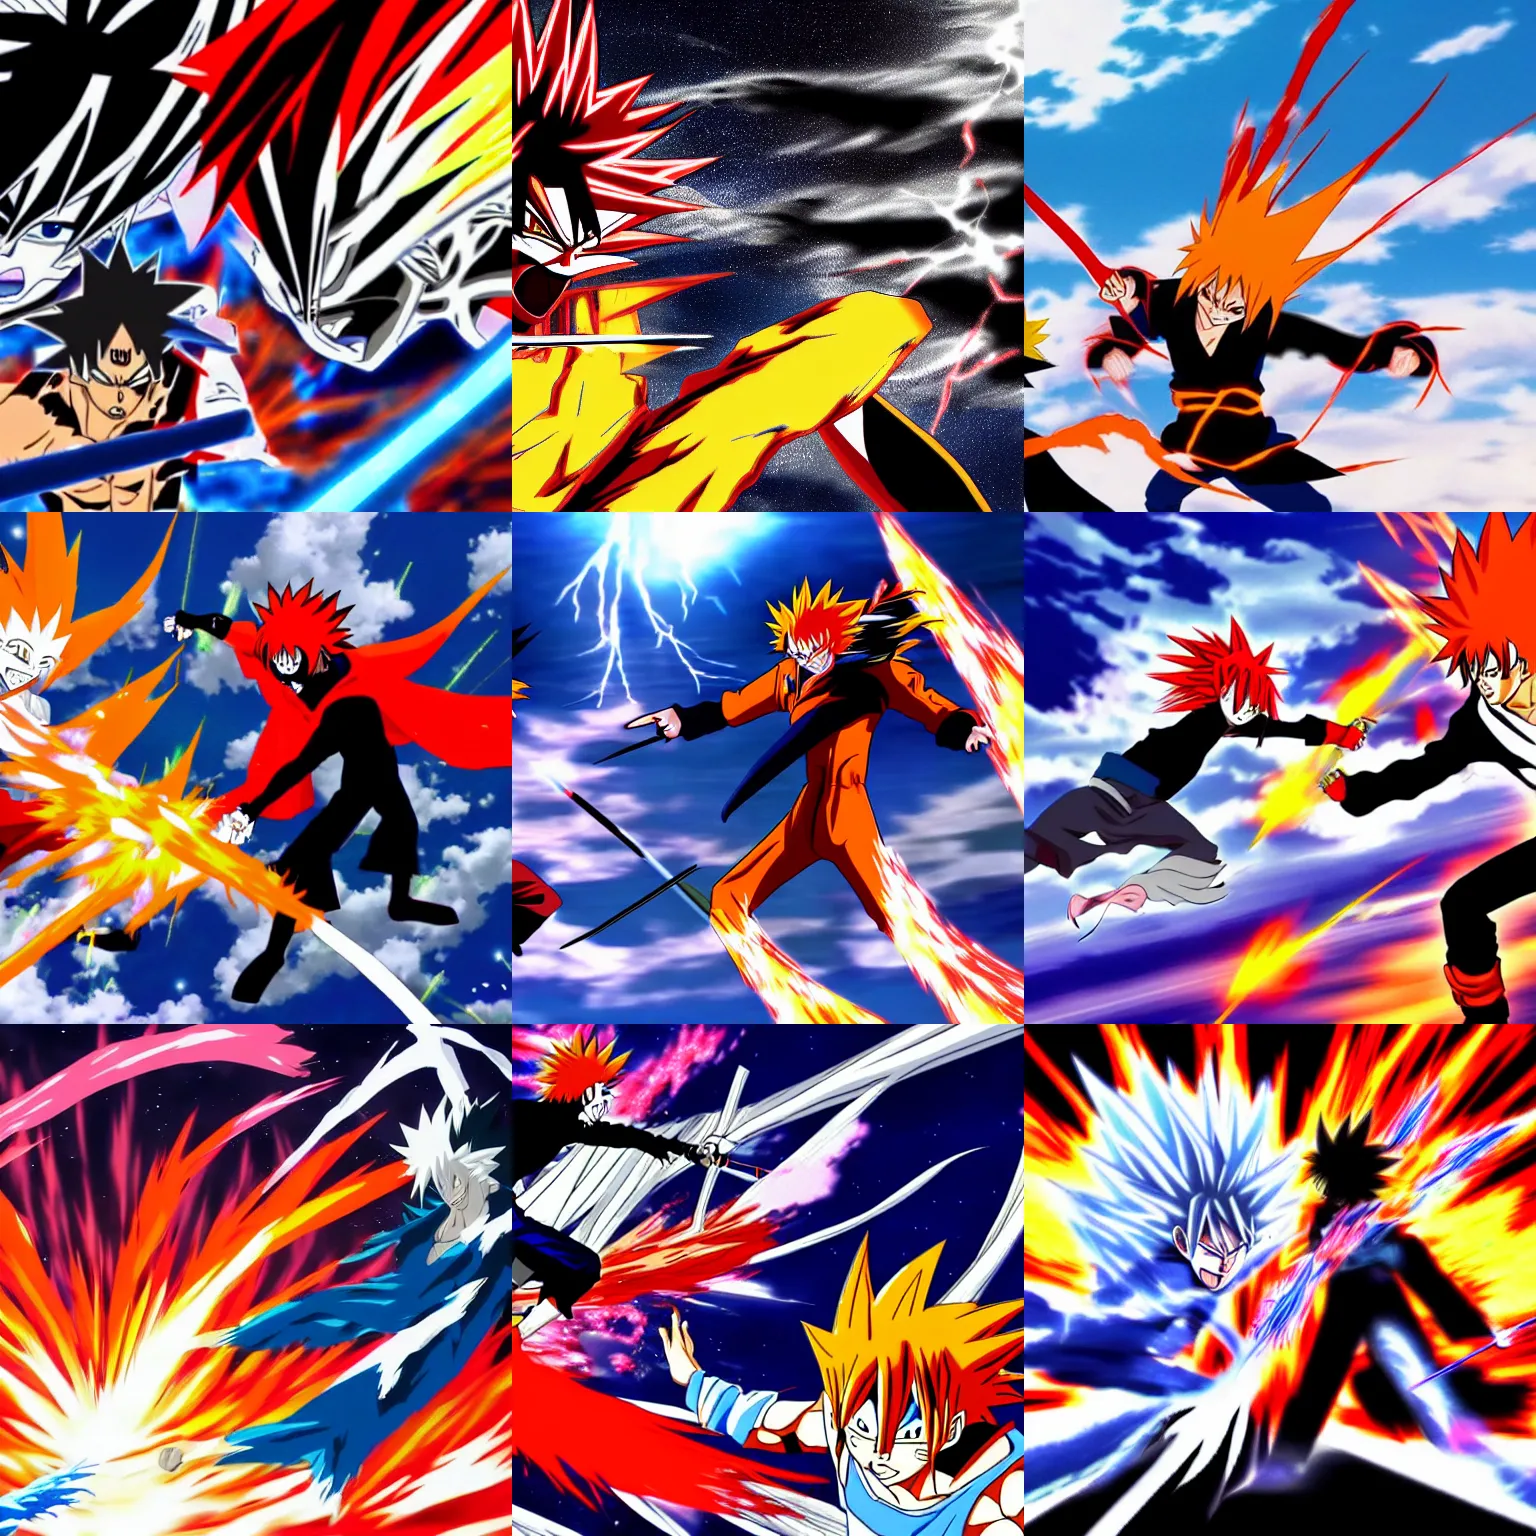 Prompt: Ichigo Kurosaki battling Goku in the sky, 4k